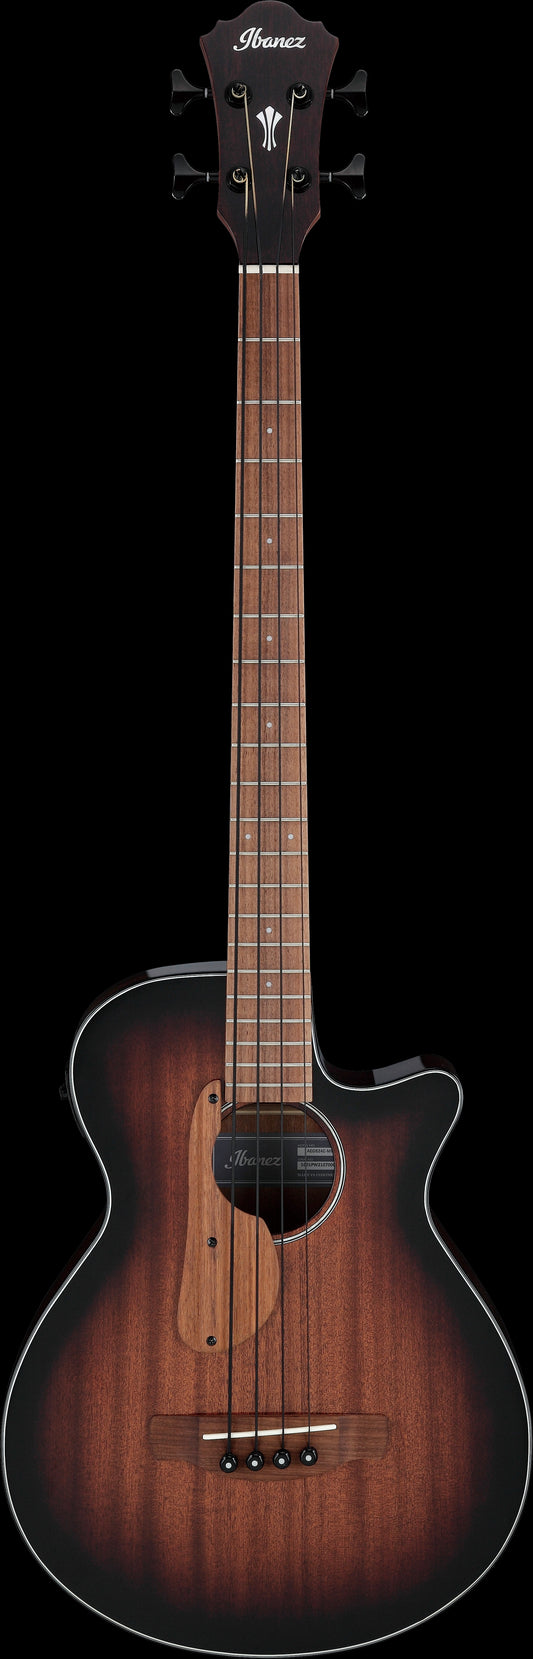 Ibanez AEGB24E Acoustic/Electric Bass Guitar - Mahogany Sunburst High Gloss